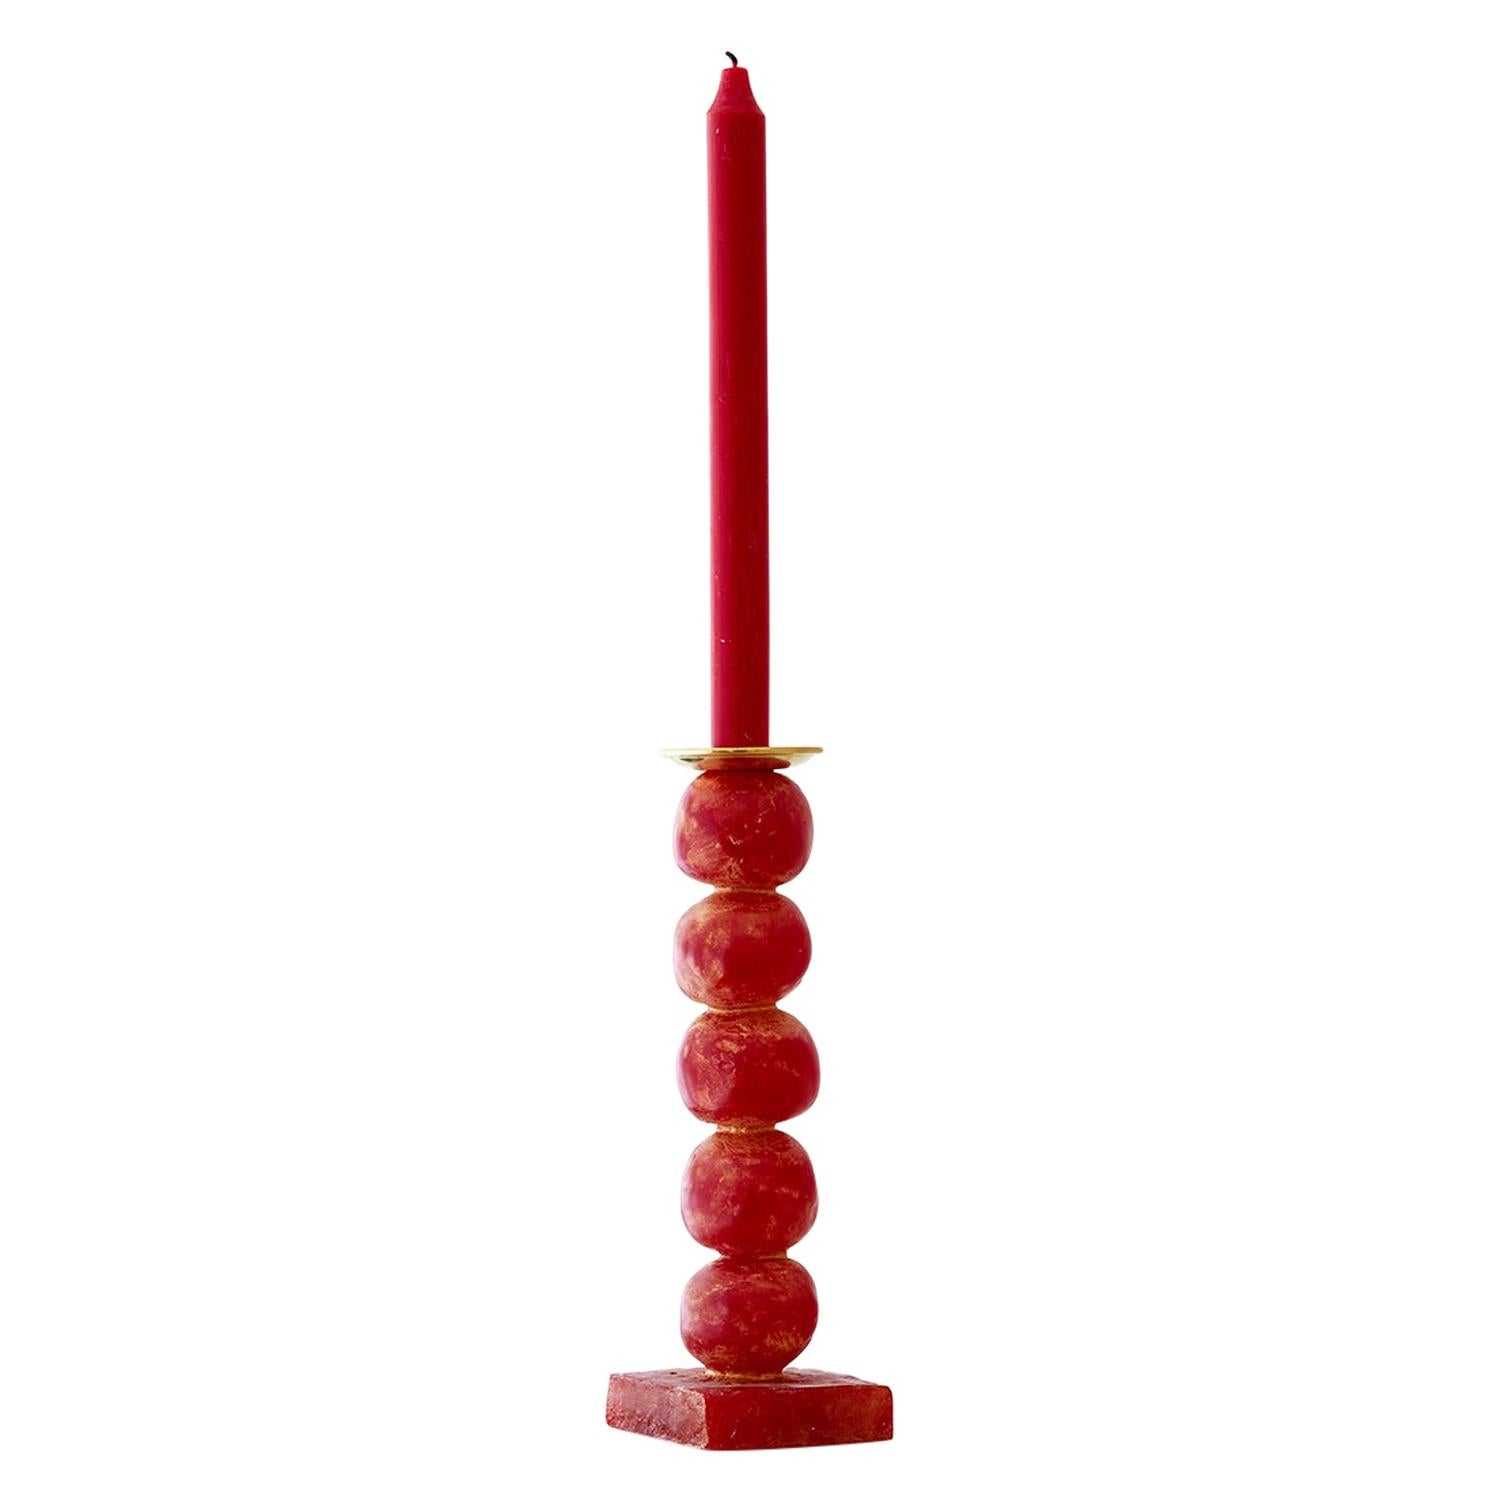 European Contemporary Red Sculptural Candlestick by Margit Wittig